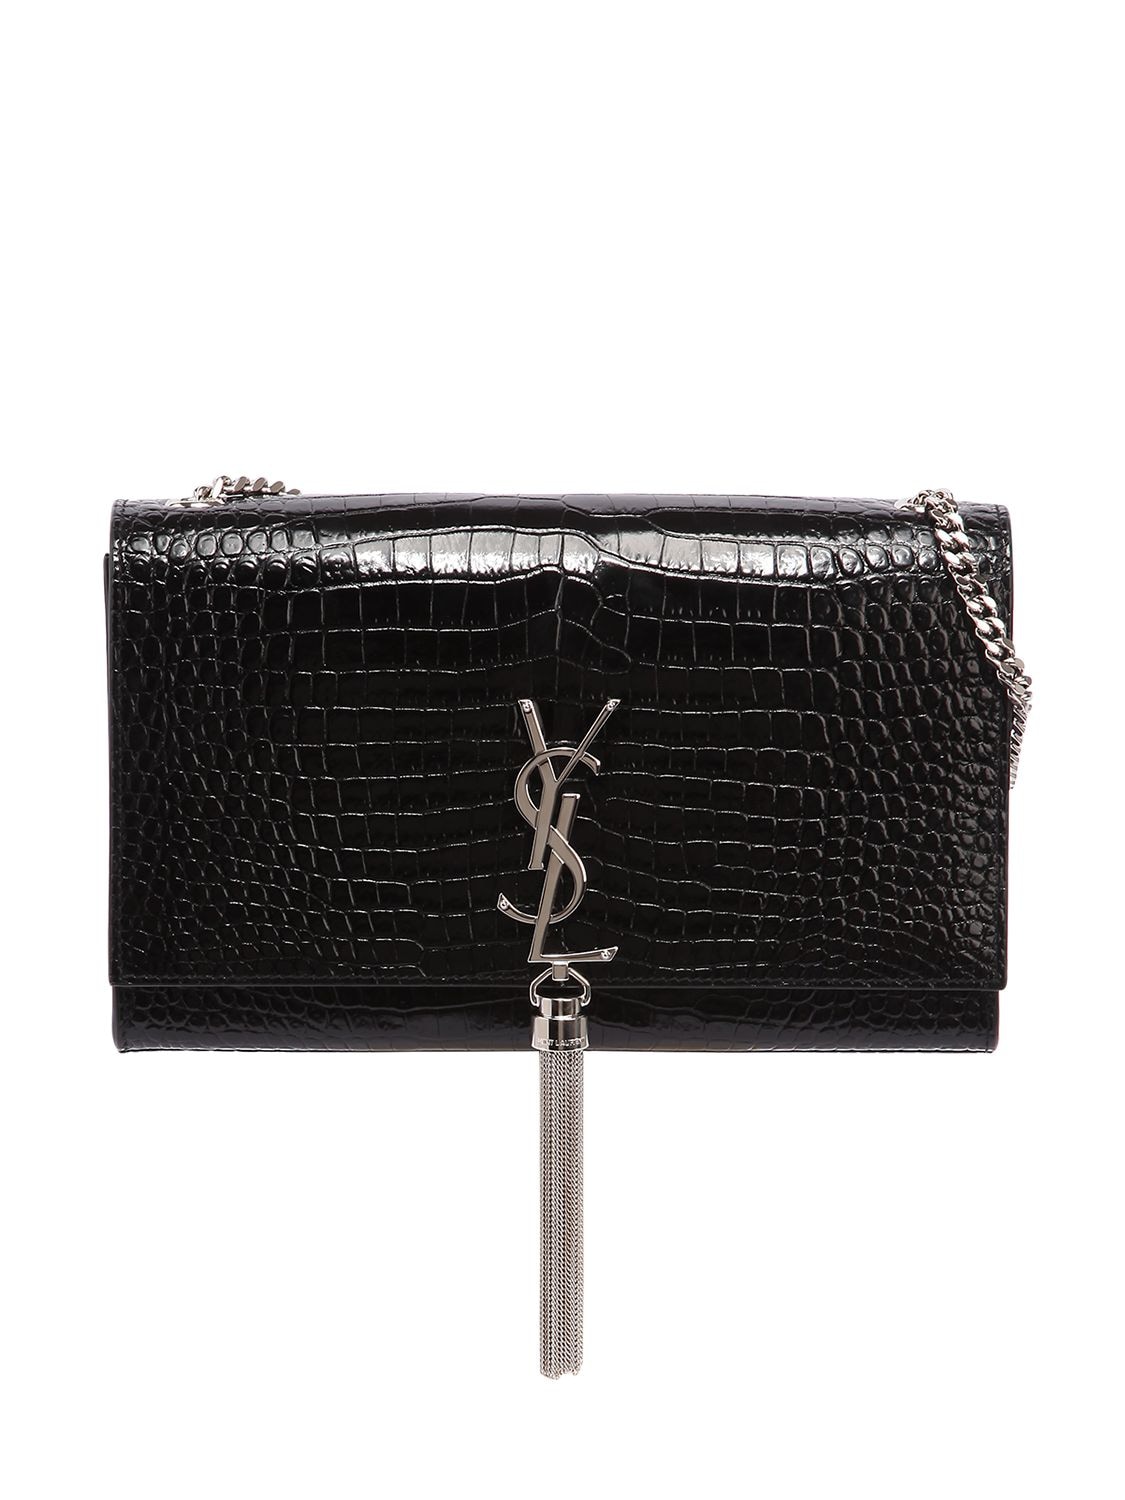 Saint Laurent Medium Kate Croc Embossed Leather Bag In Black